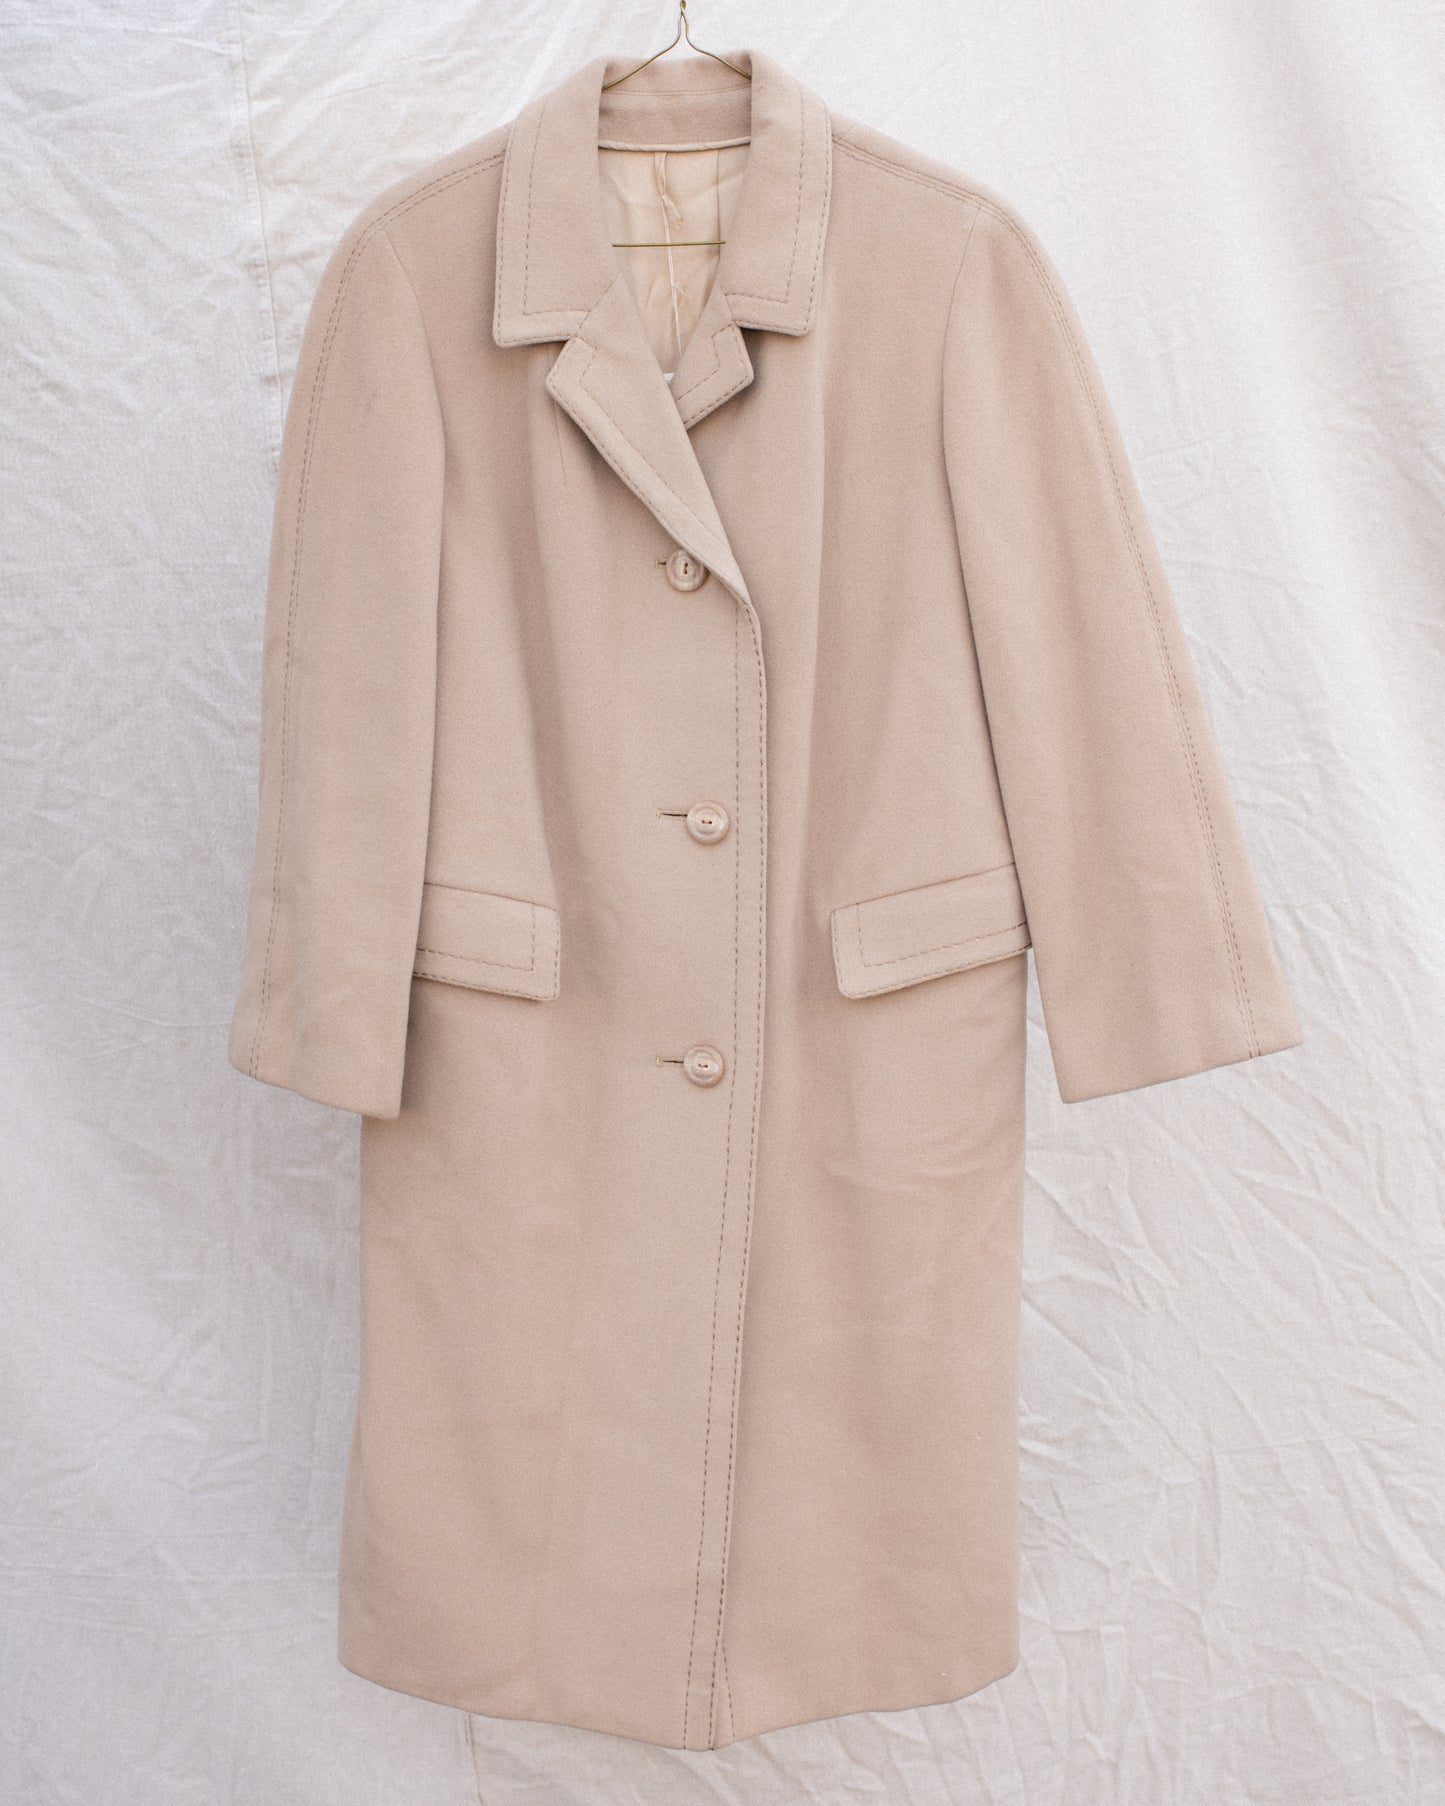 Vintage Cashmere + Wool BERLIN Coat #4 (XS/S)